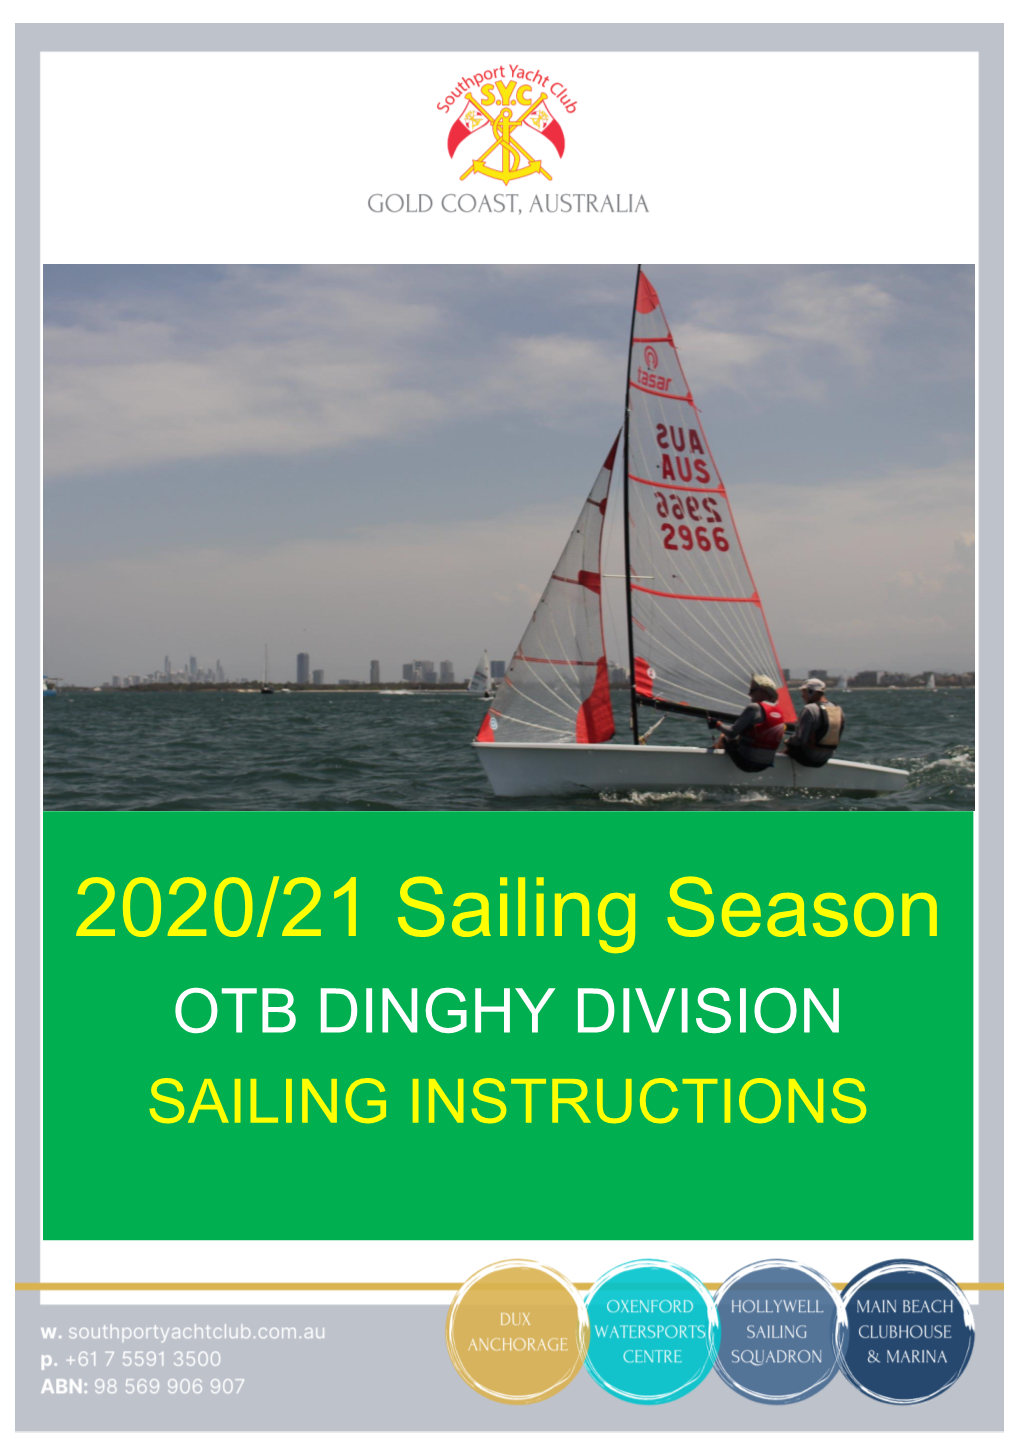 2020/21 Sailing Season OTB DINGHY DIVISION SAILING INSTRUCTIONS OTB DINGHY DIVISION – 2020/21 SAILING INSTRUCTIONS